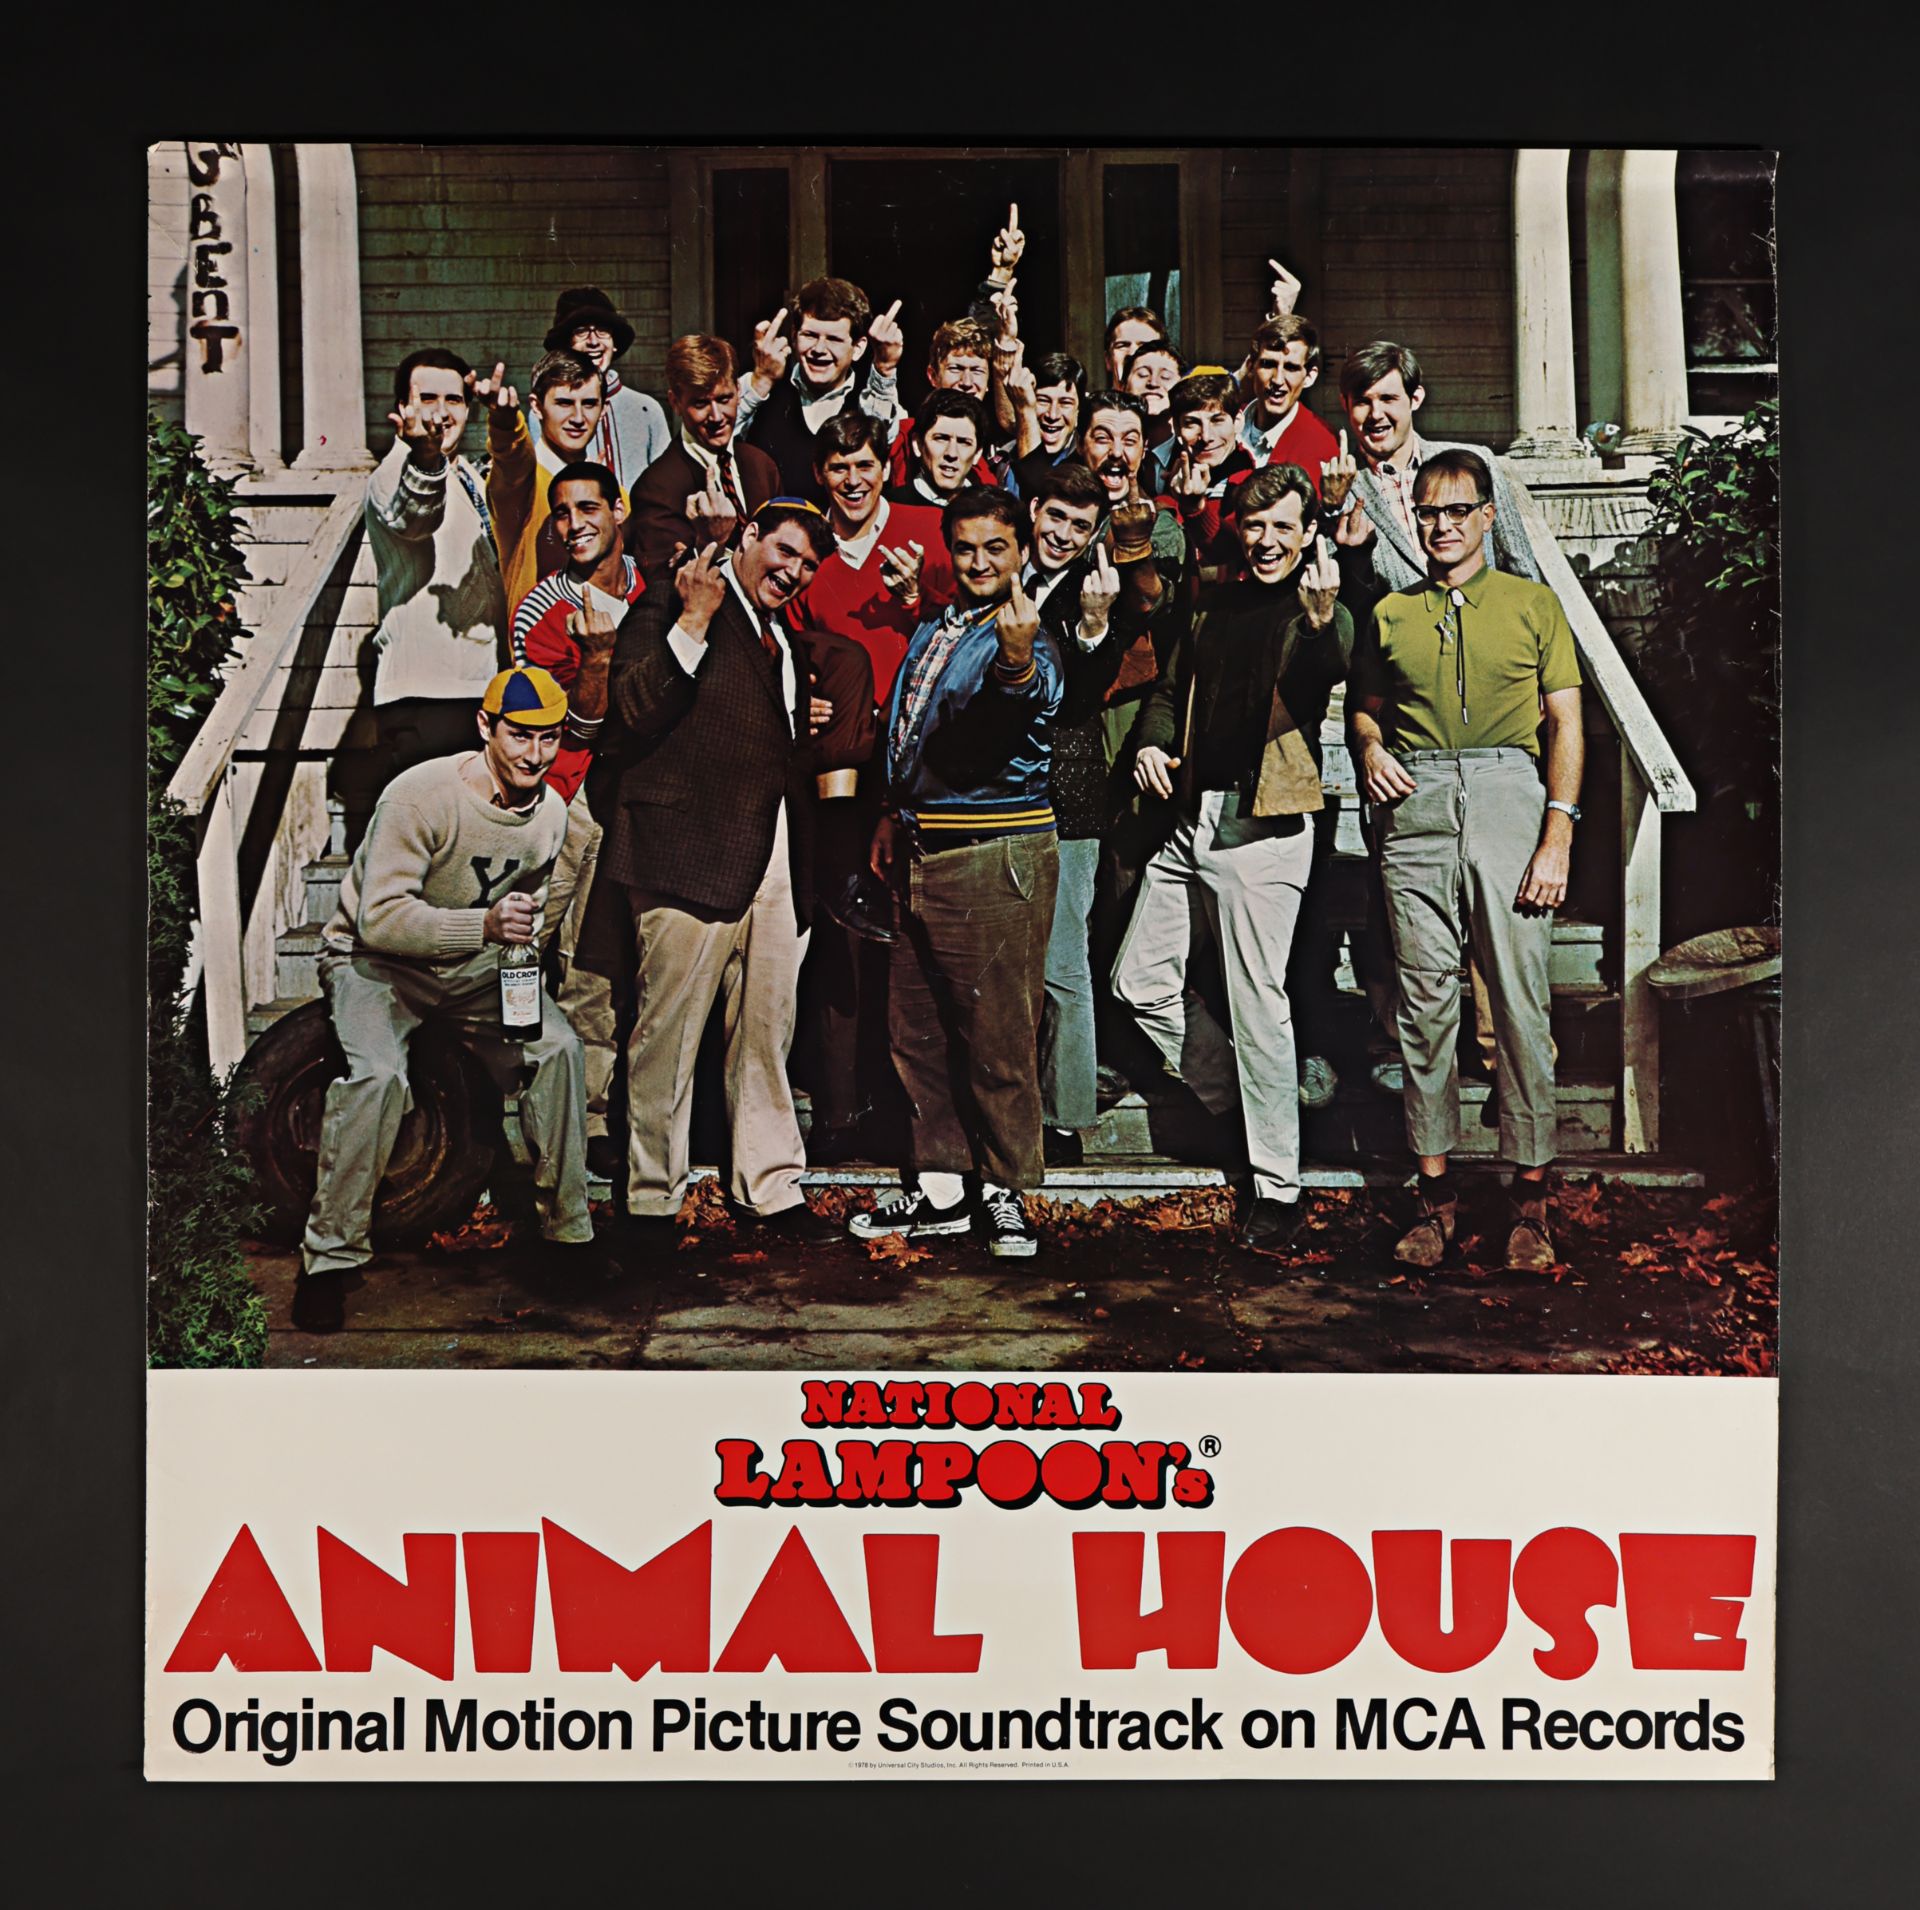 ANIMAL HOUSE (1978) - David Frangioni Collection: Soundtrack Poster, 1978